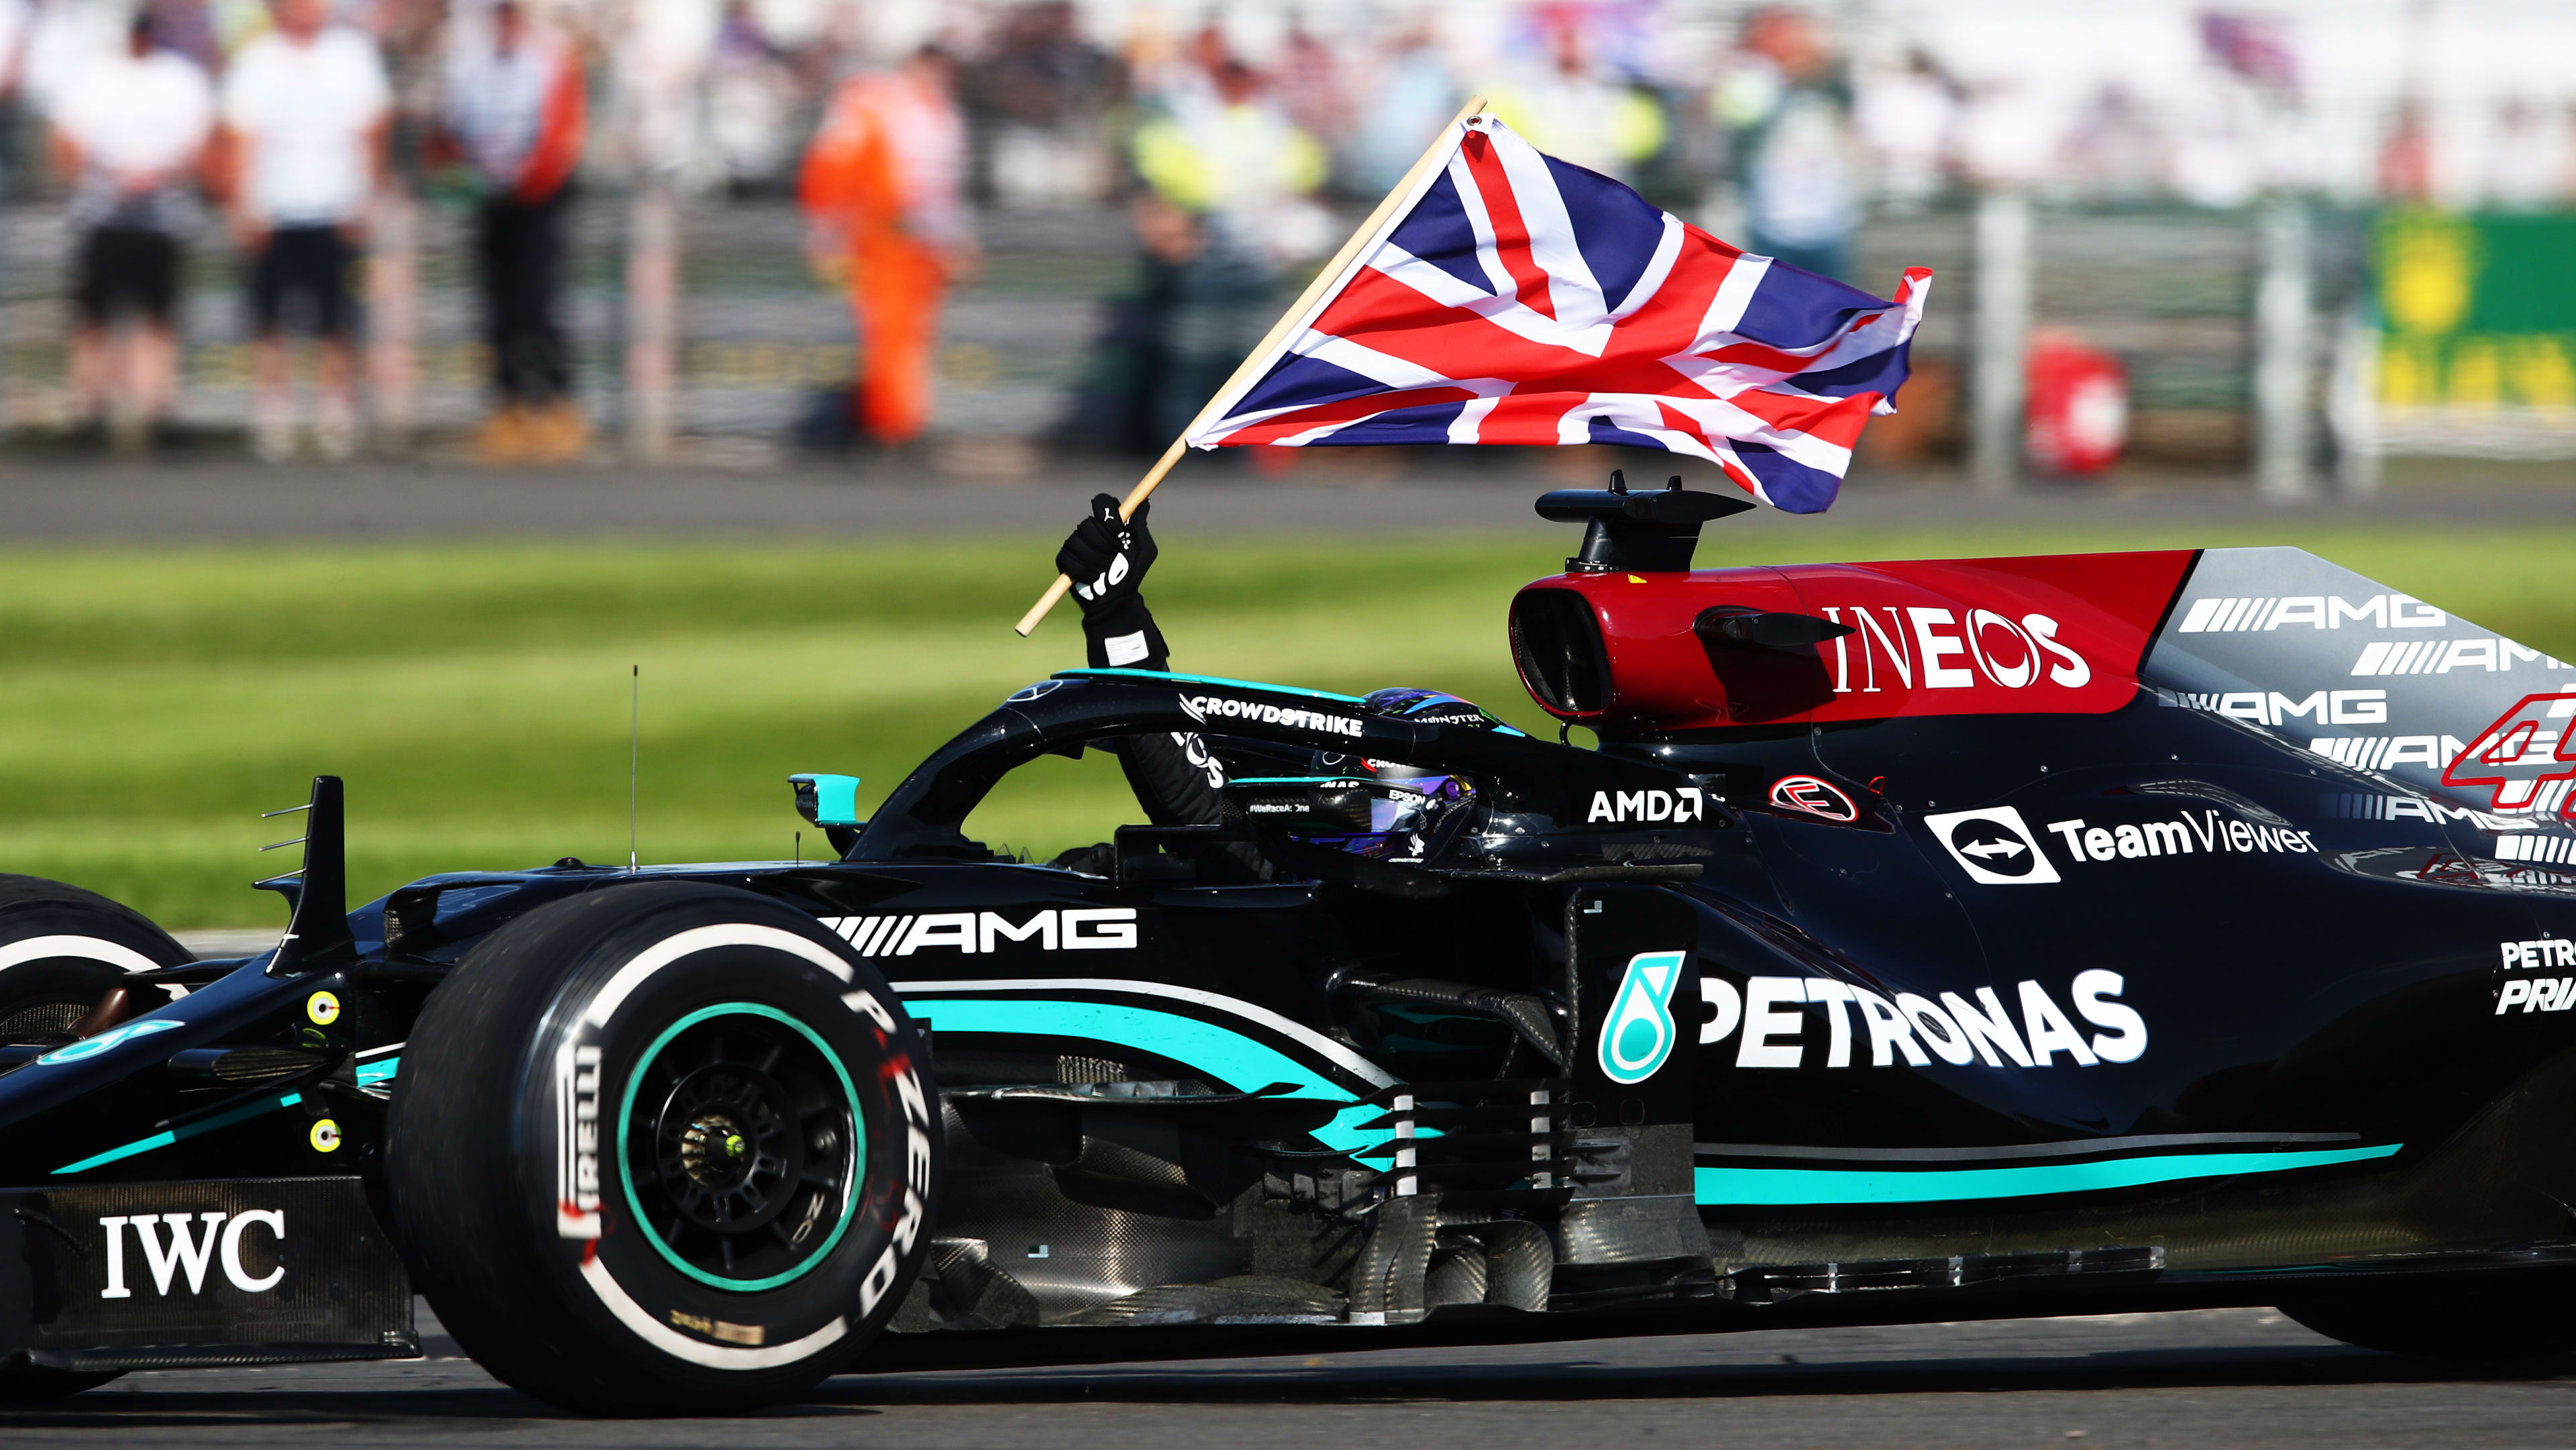 2021 British Grand Prix race report & highlights: Hamilton